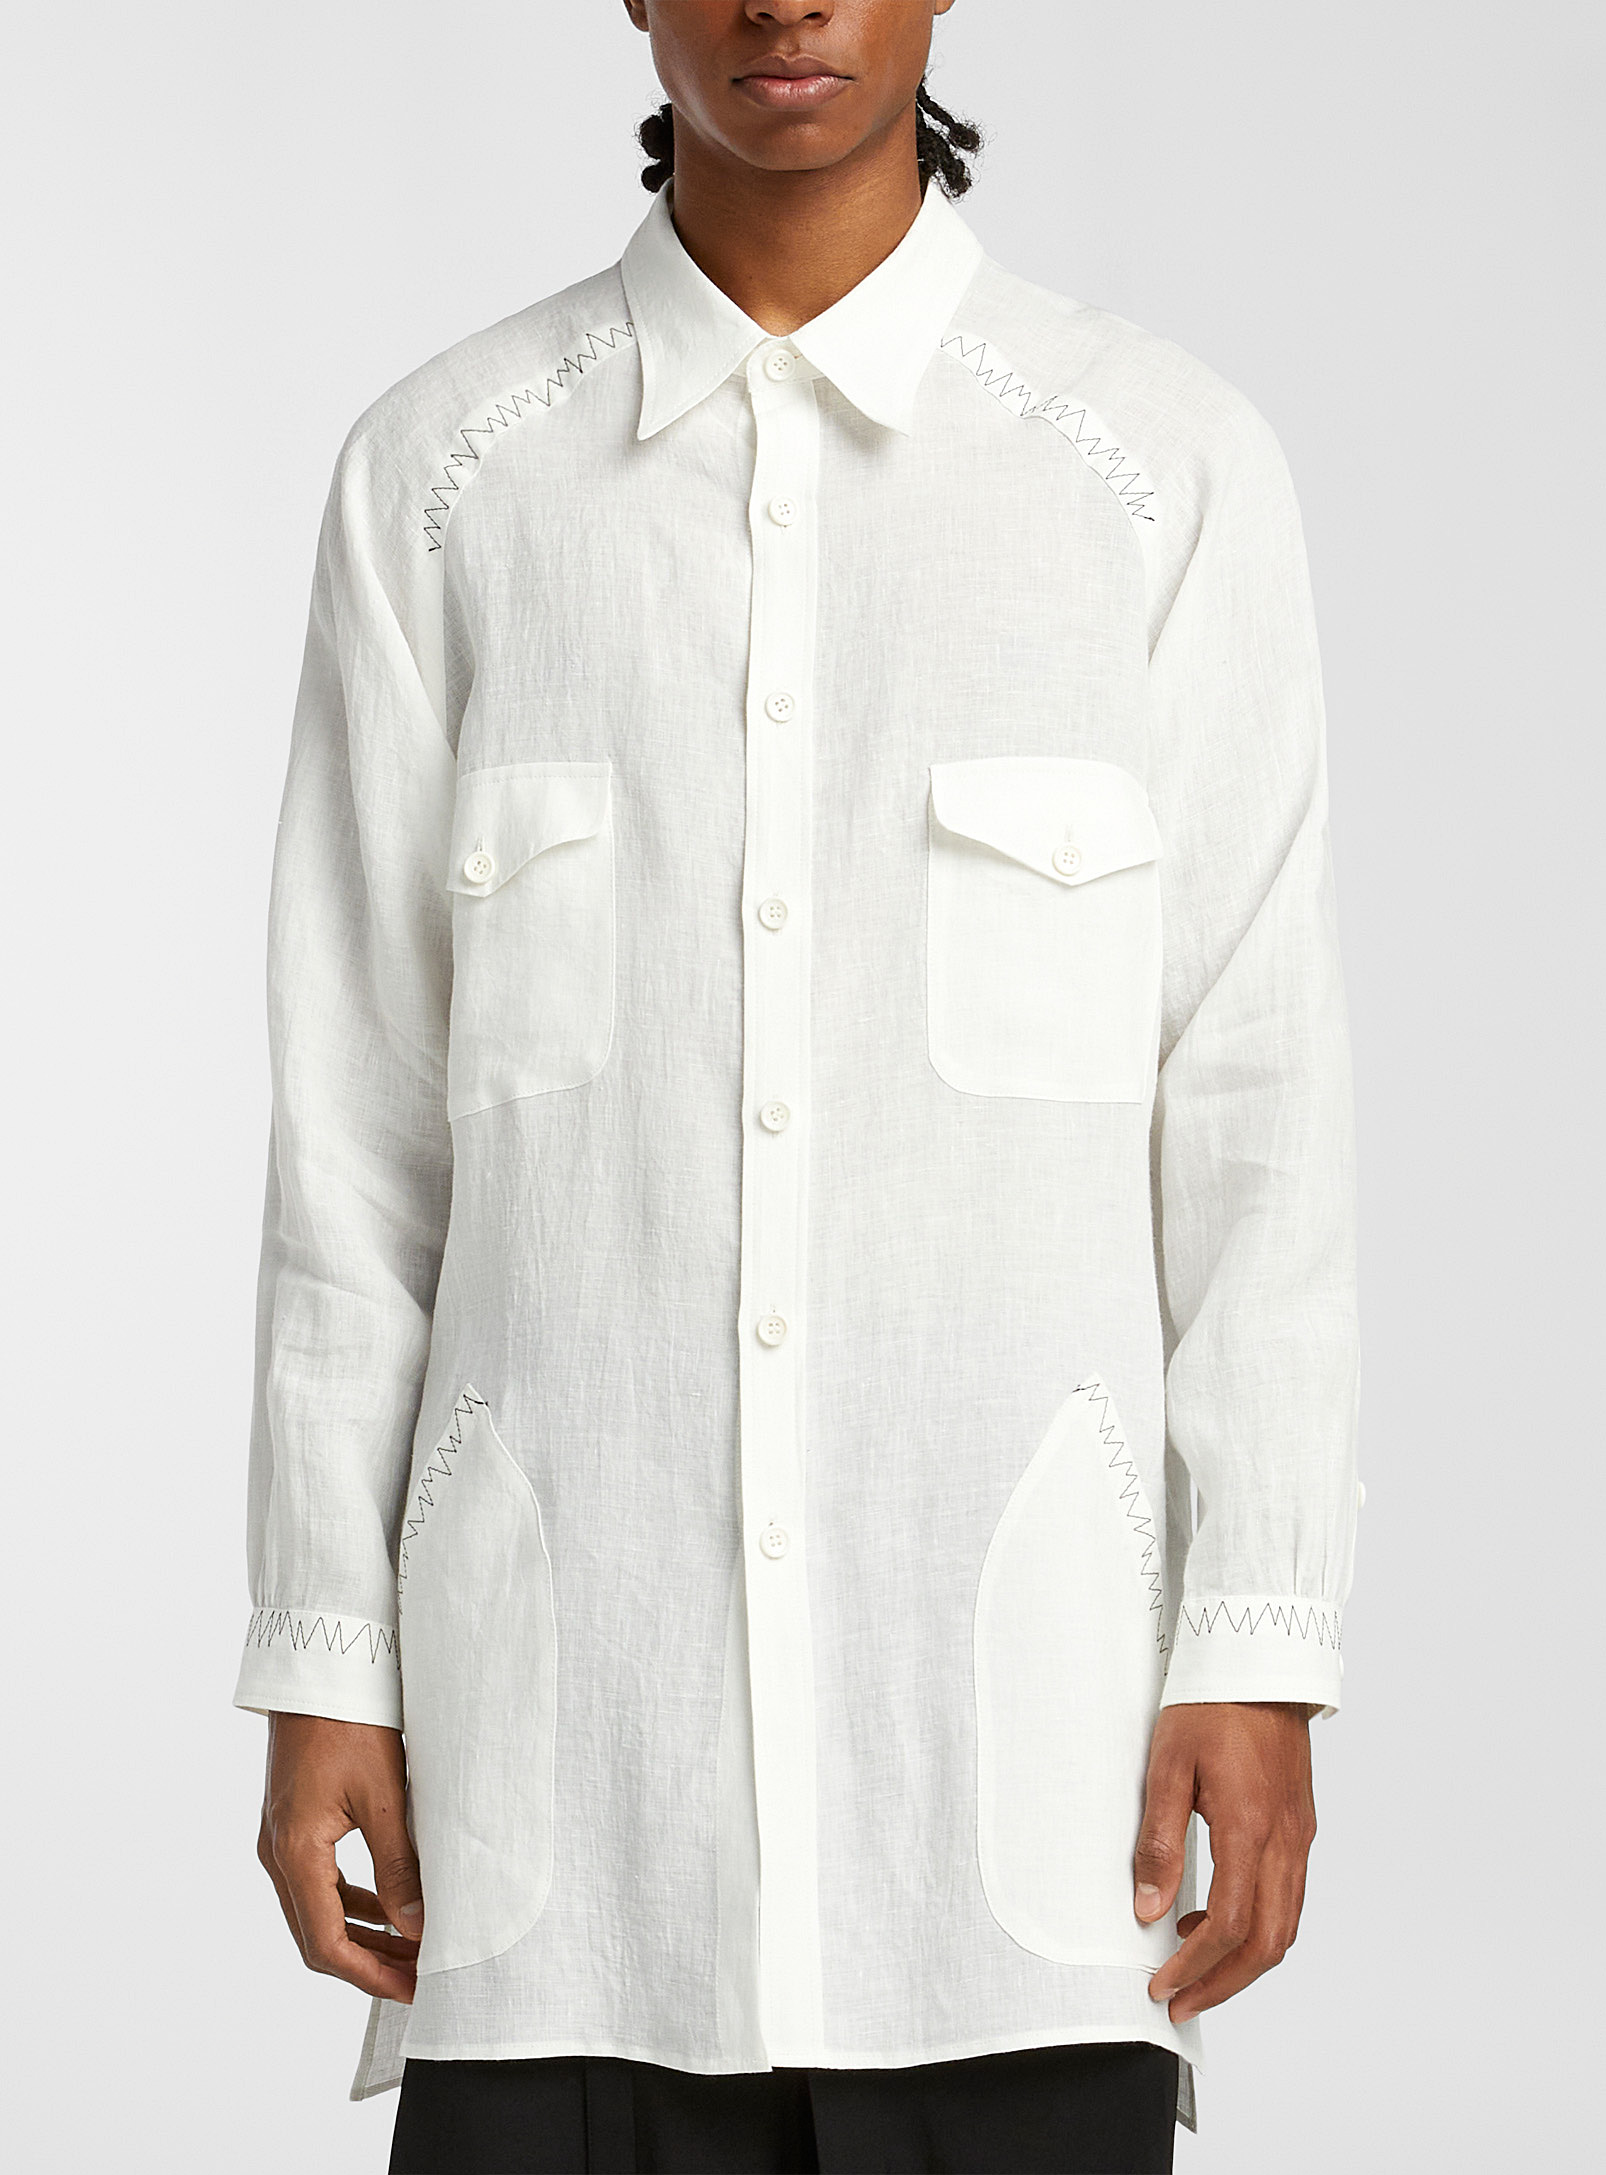 Yohji Yamamoto - La longue chemise lin coutures graphiques